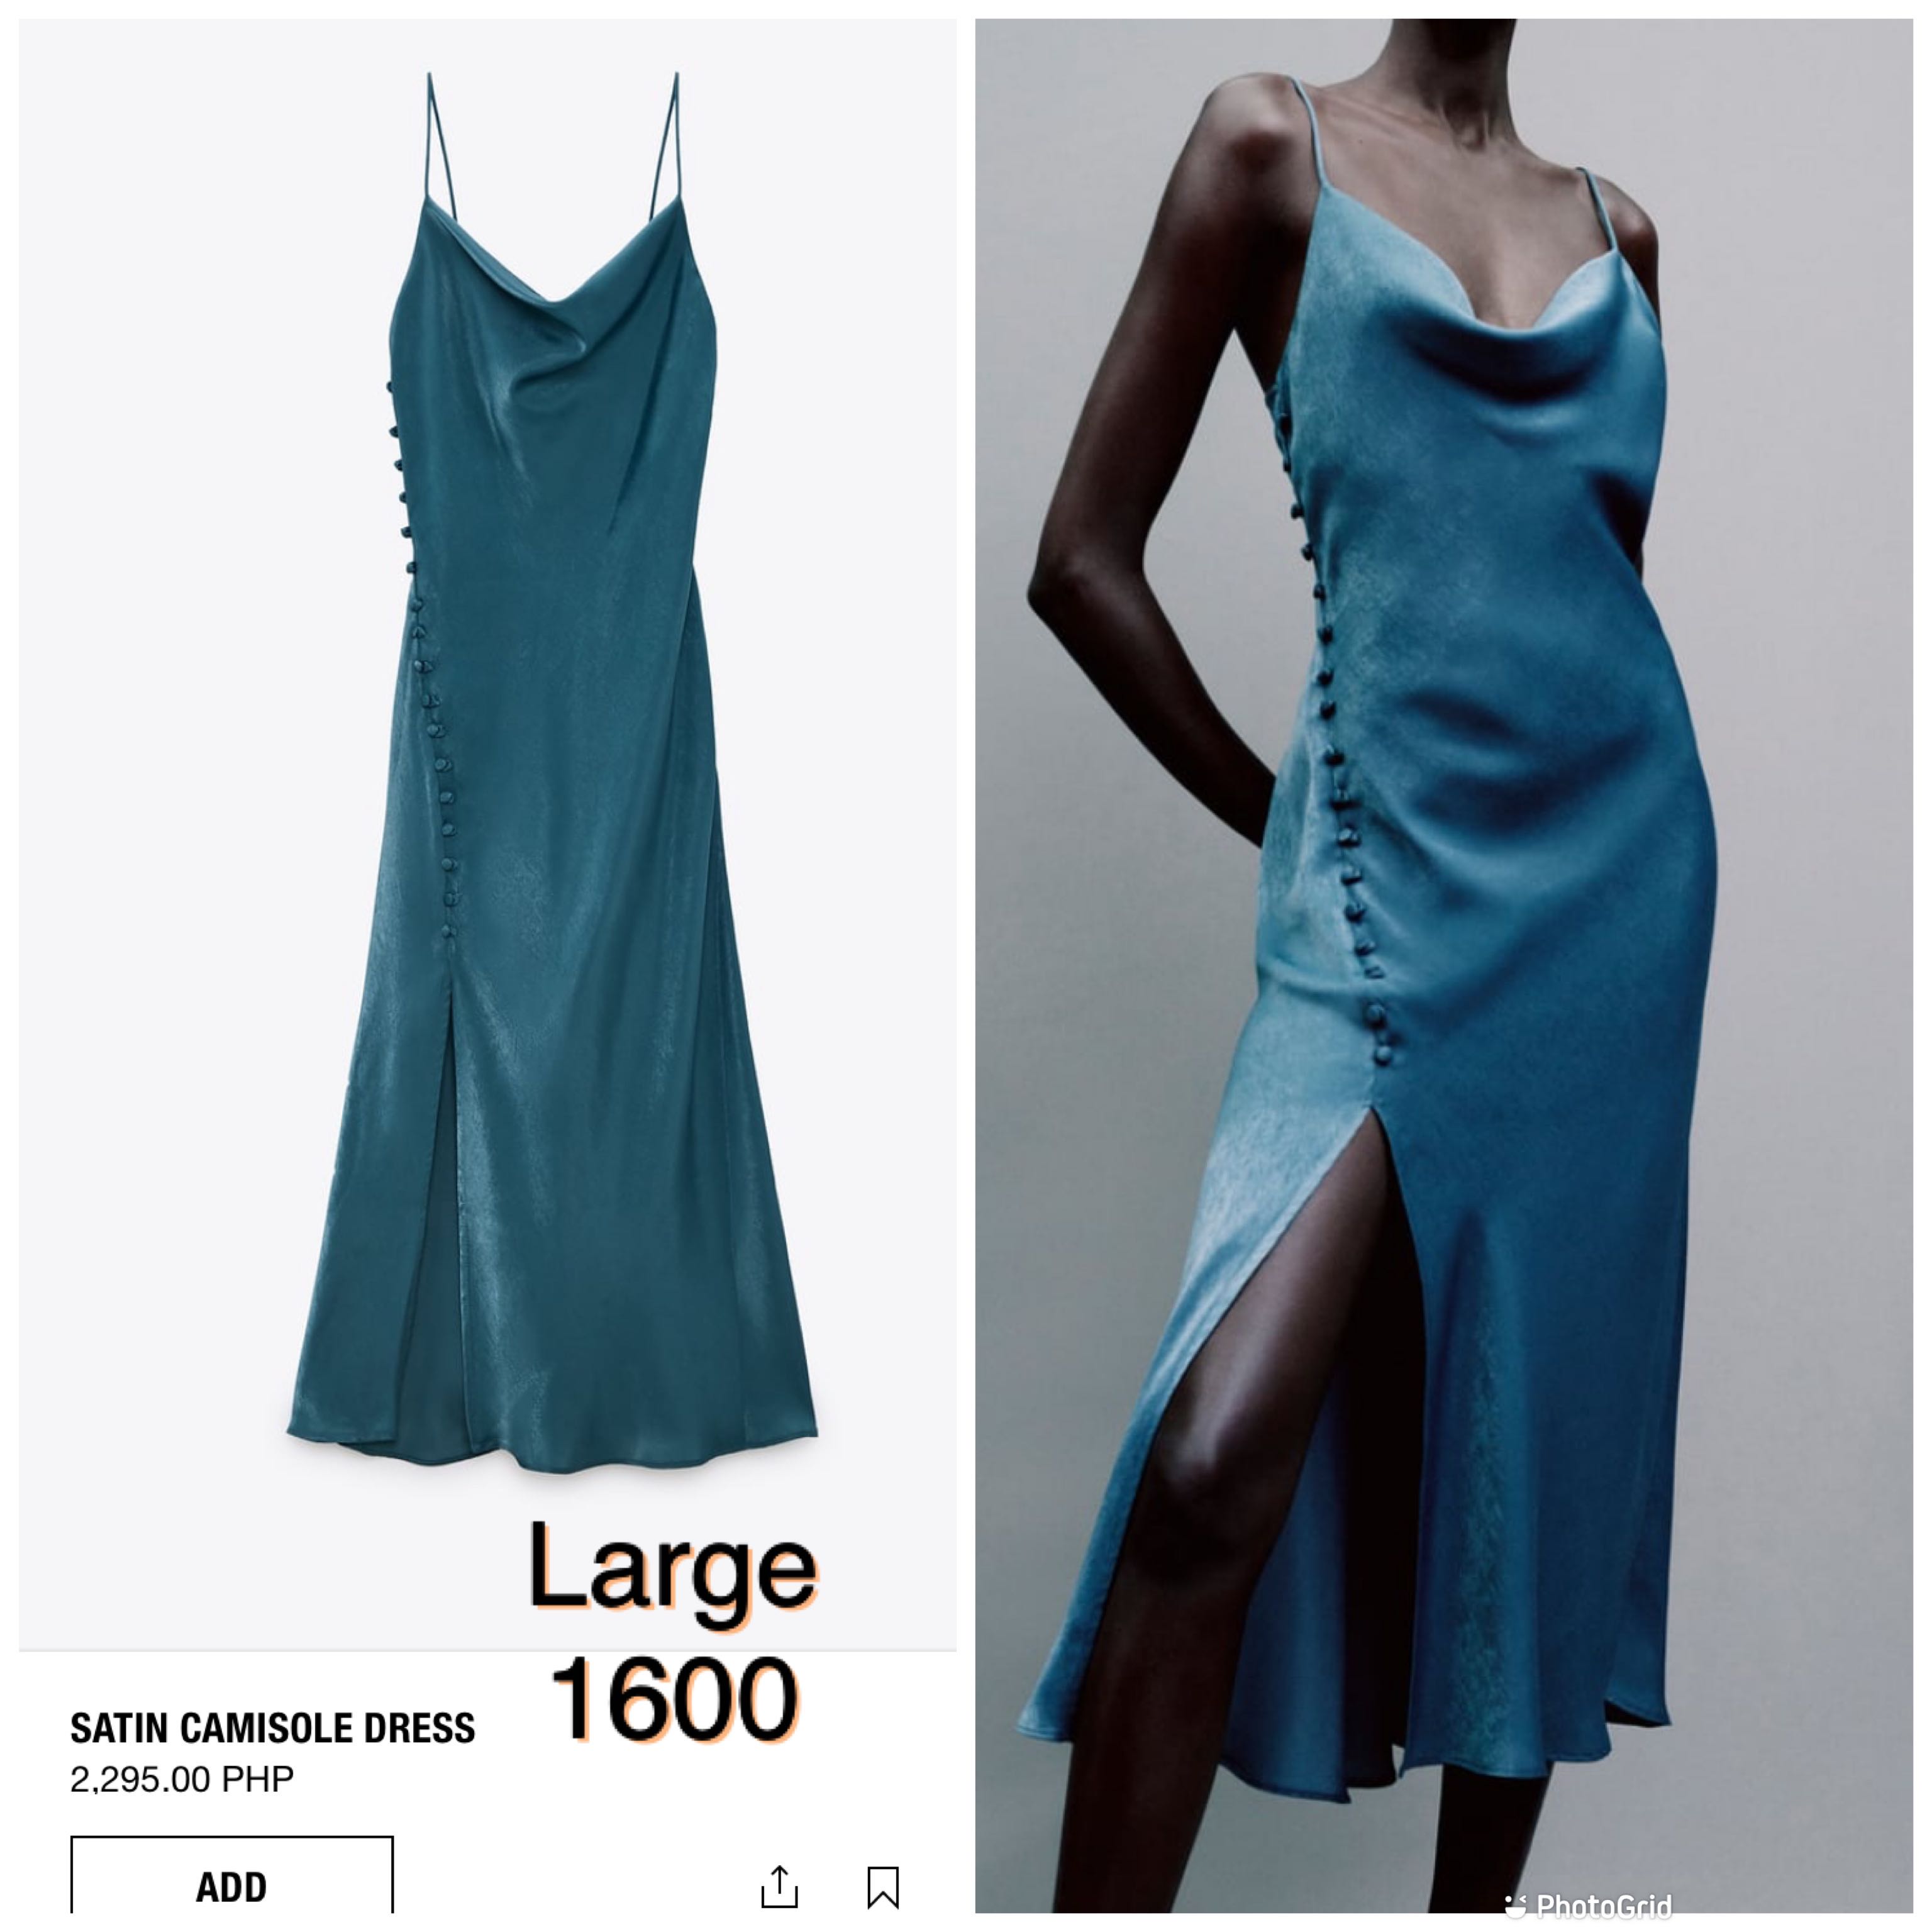 camisole dress zara Big sale - OFF 63%